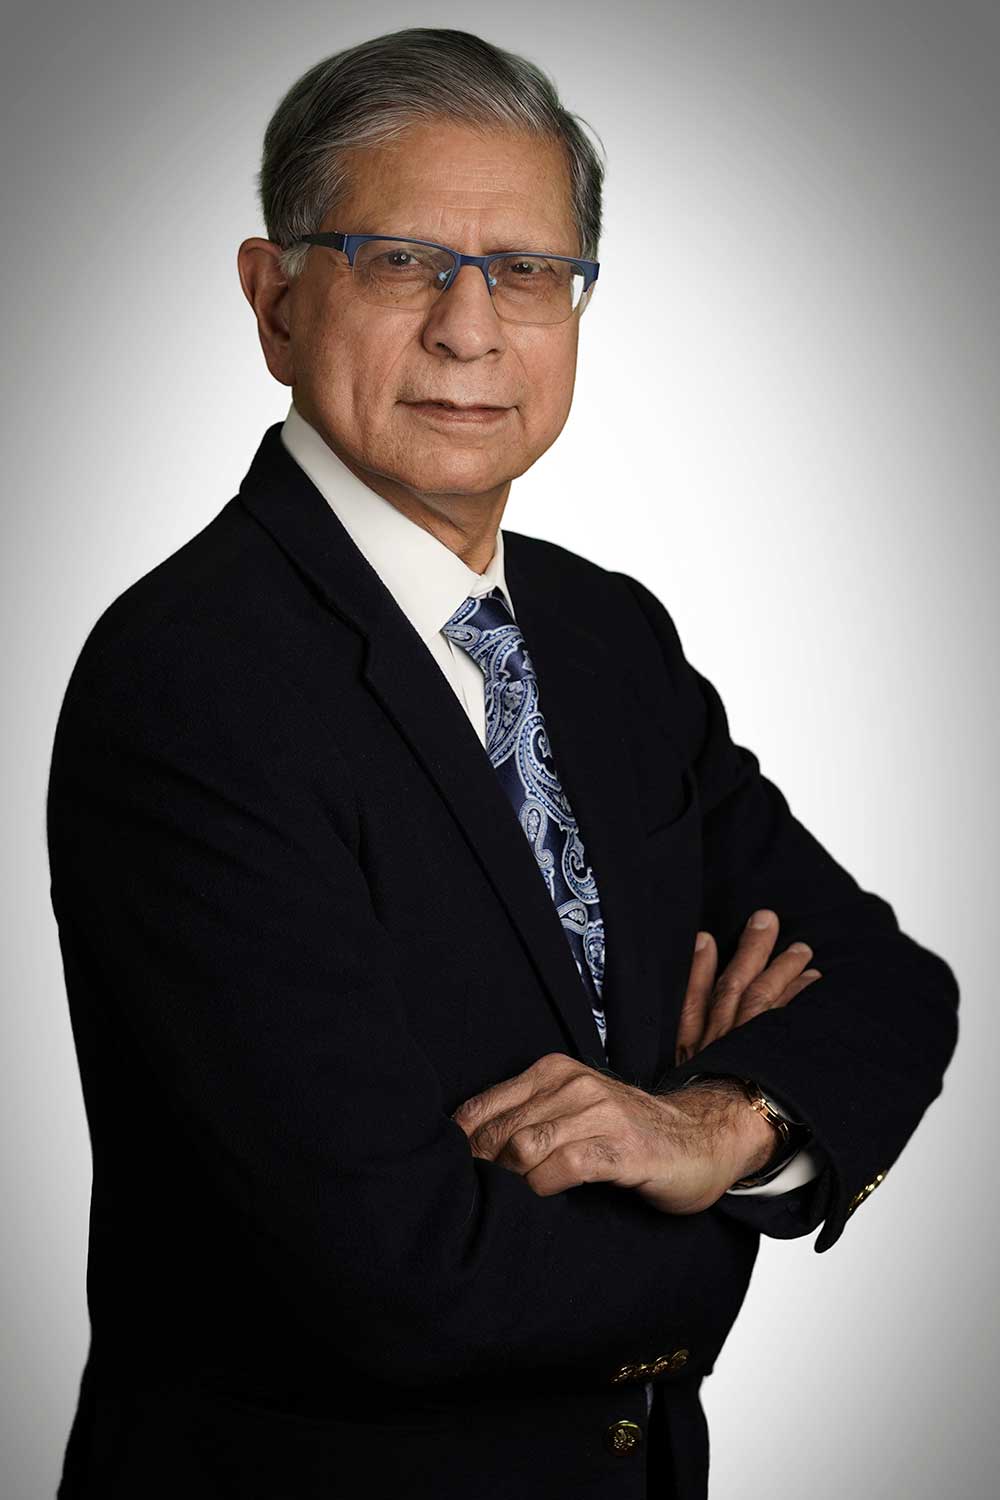 Headshot of retired neurosurgeon Dr. Shahid wearing a black suit angled left